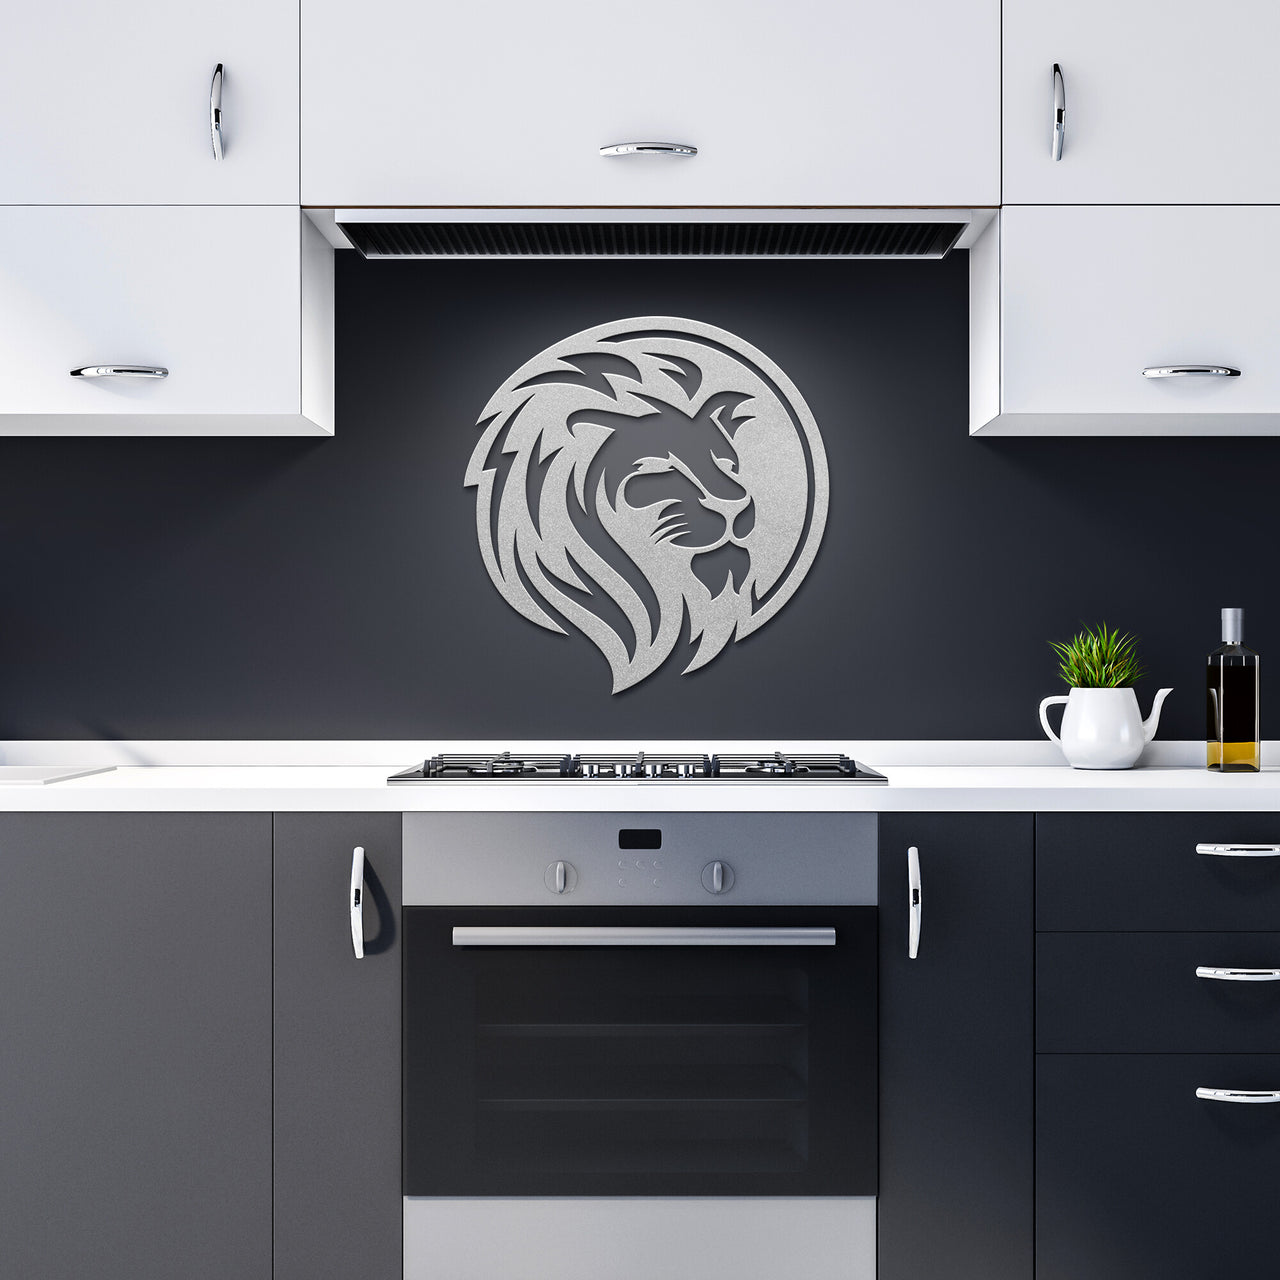 lion-logo-91